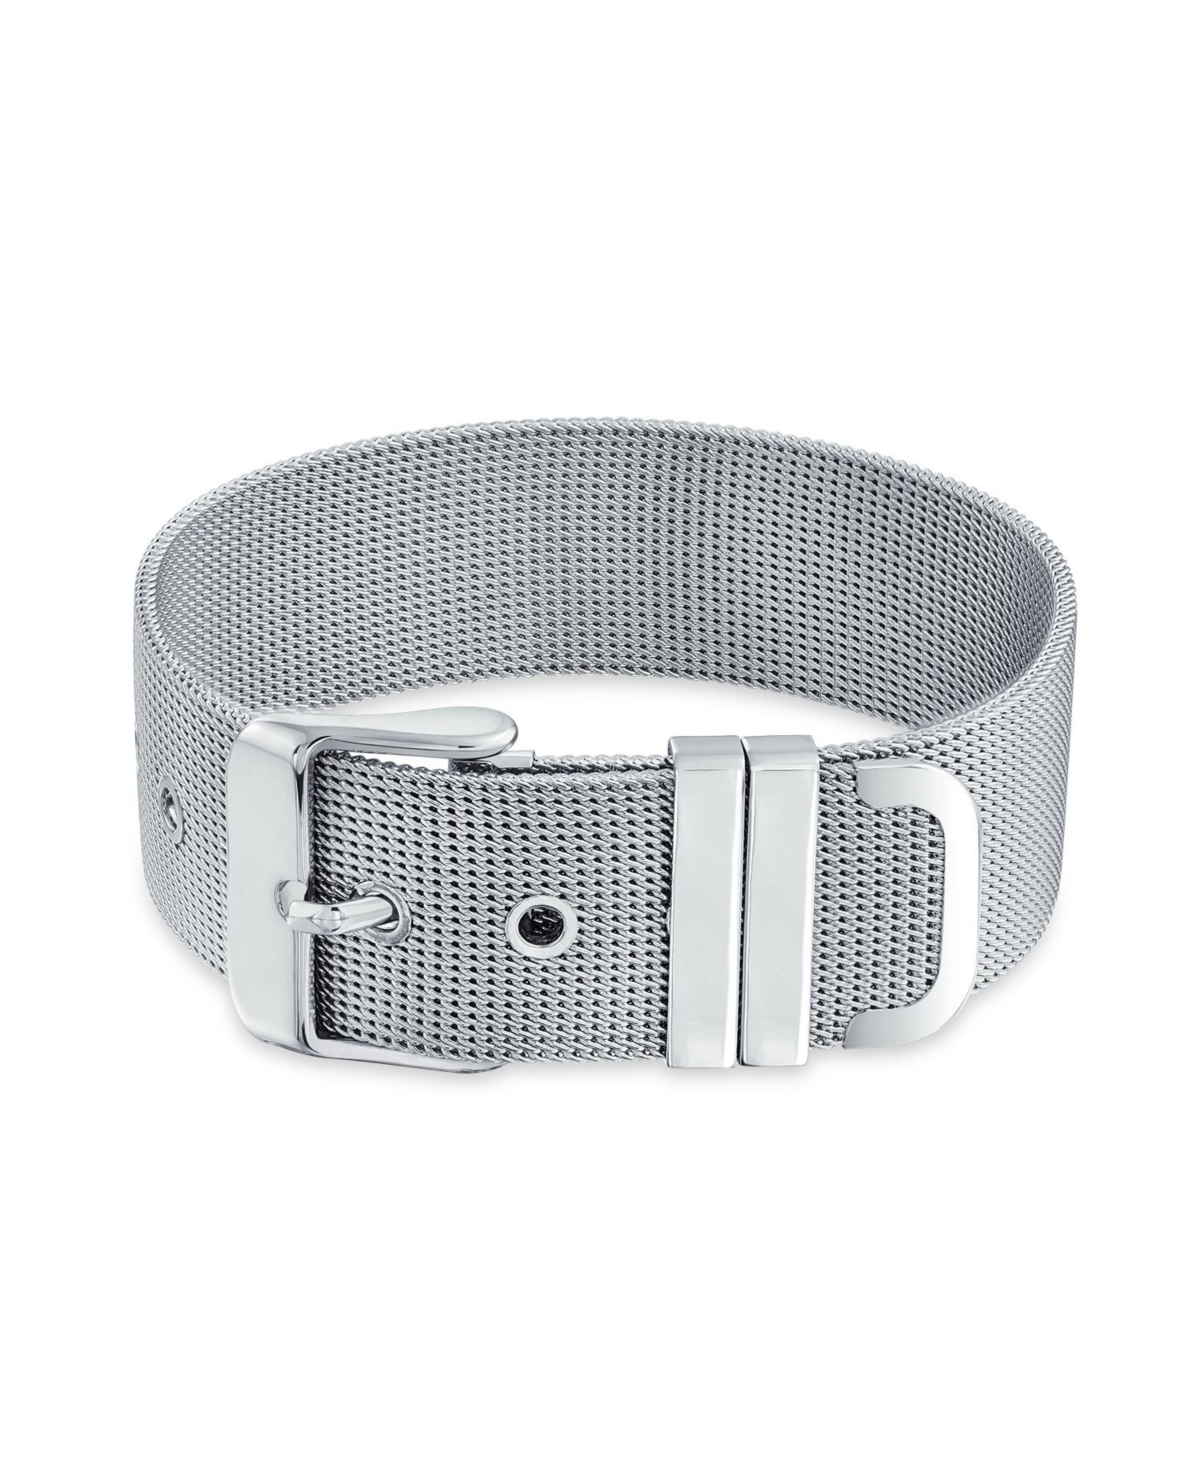 Unisex Wide Band Mesh Belt Buckle Bracelet For Men Women Stainless Steel Adjustable - Silver tone